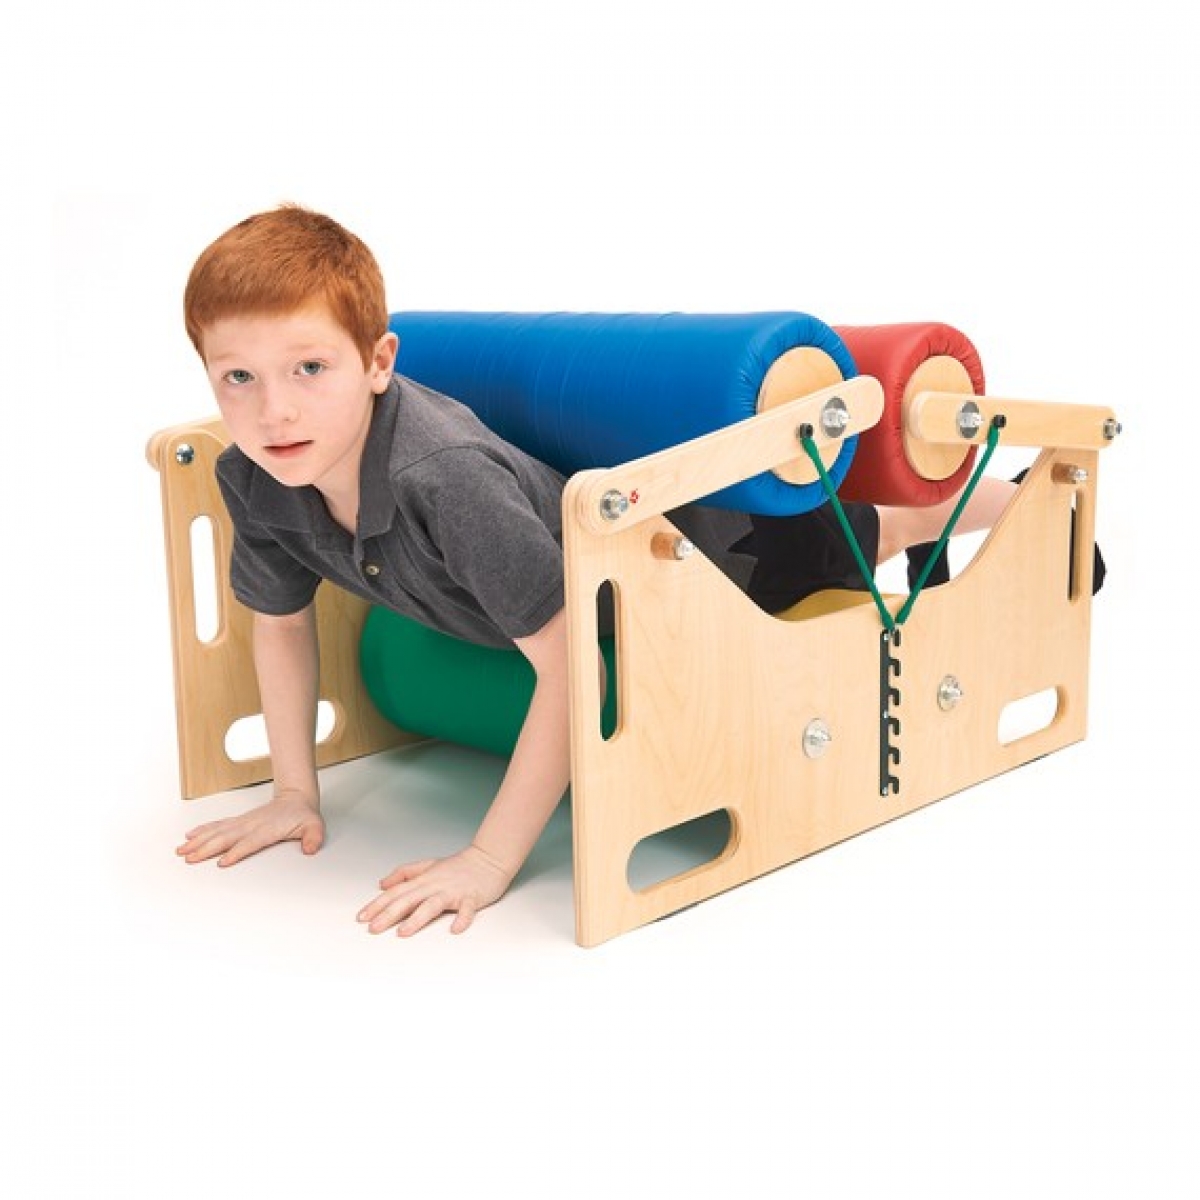 Special Needs Steamroller - Squeeze Machine - Autism Steam Roller